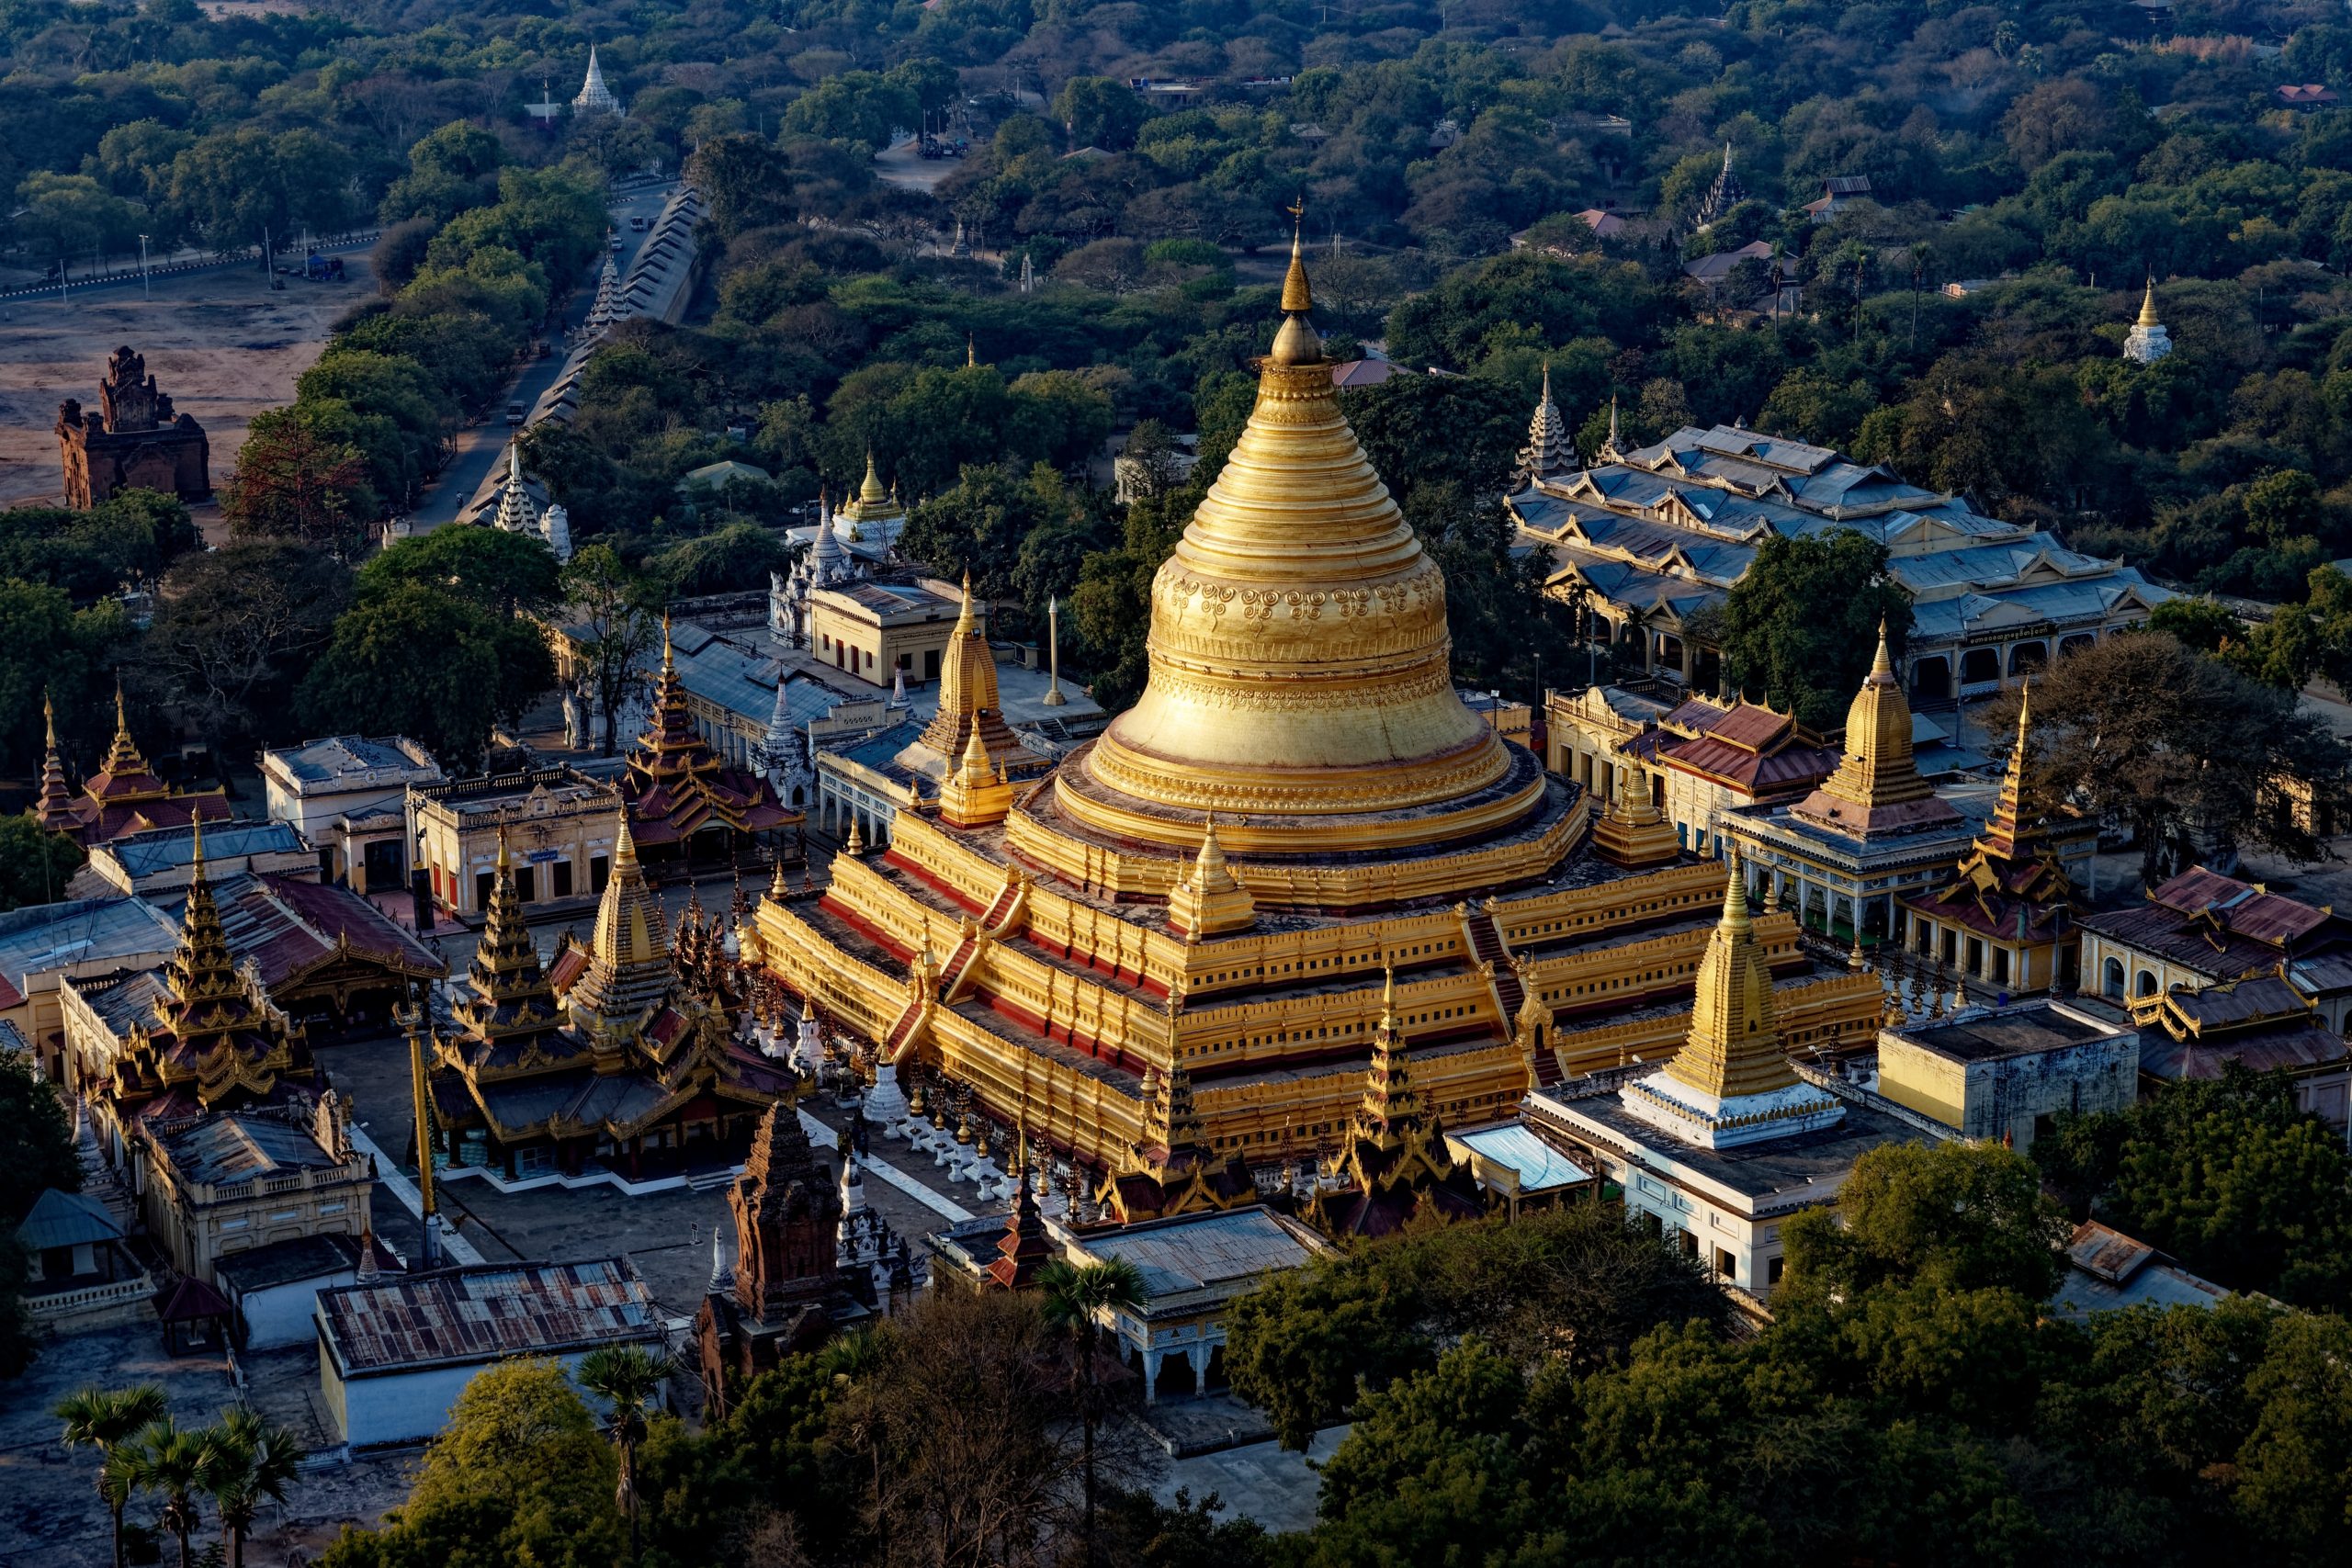 Myanmar Tour